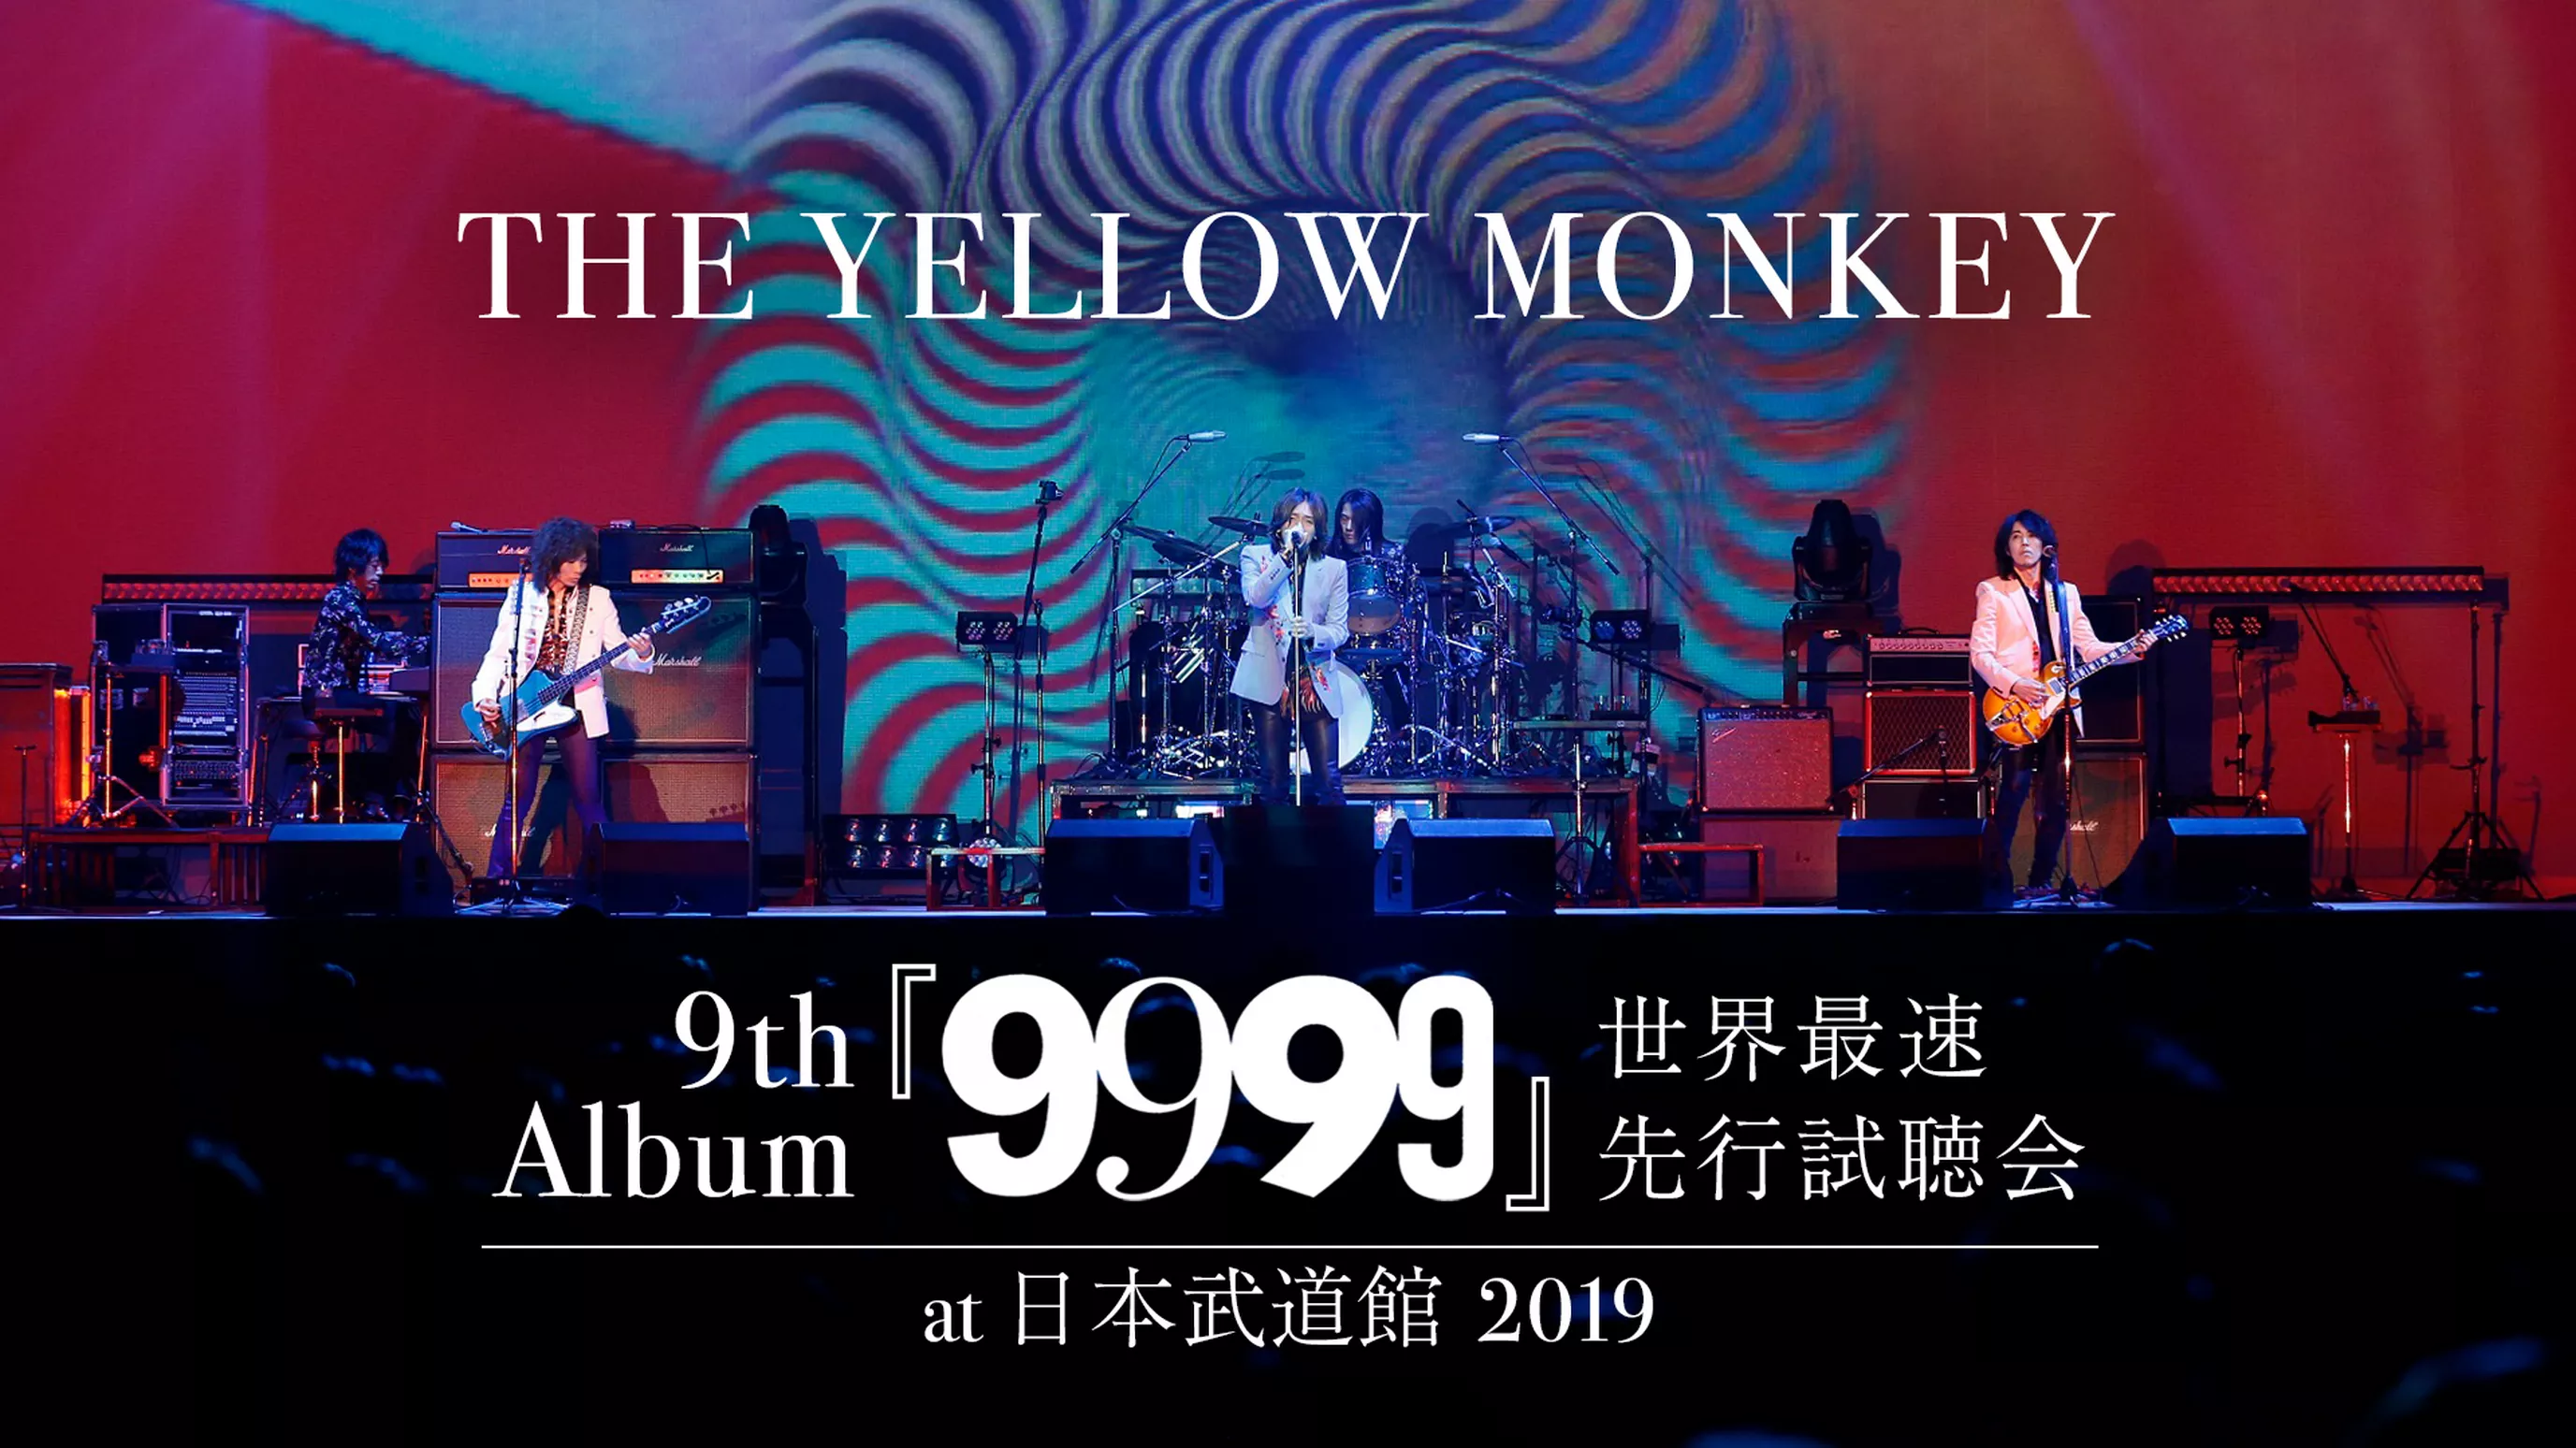 THE YELLOW MONKEY 9th Album『9999』世界最速先行試聴会 at 日本武道館 2019